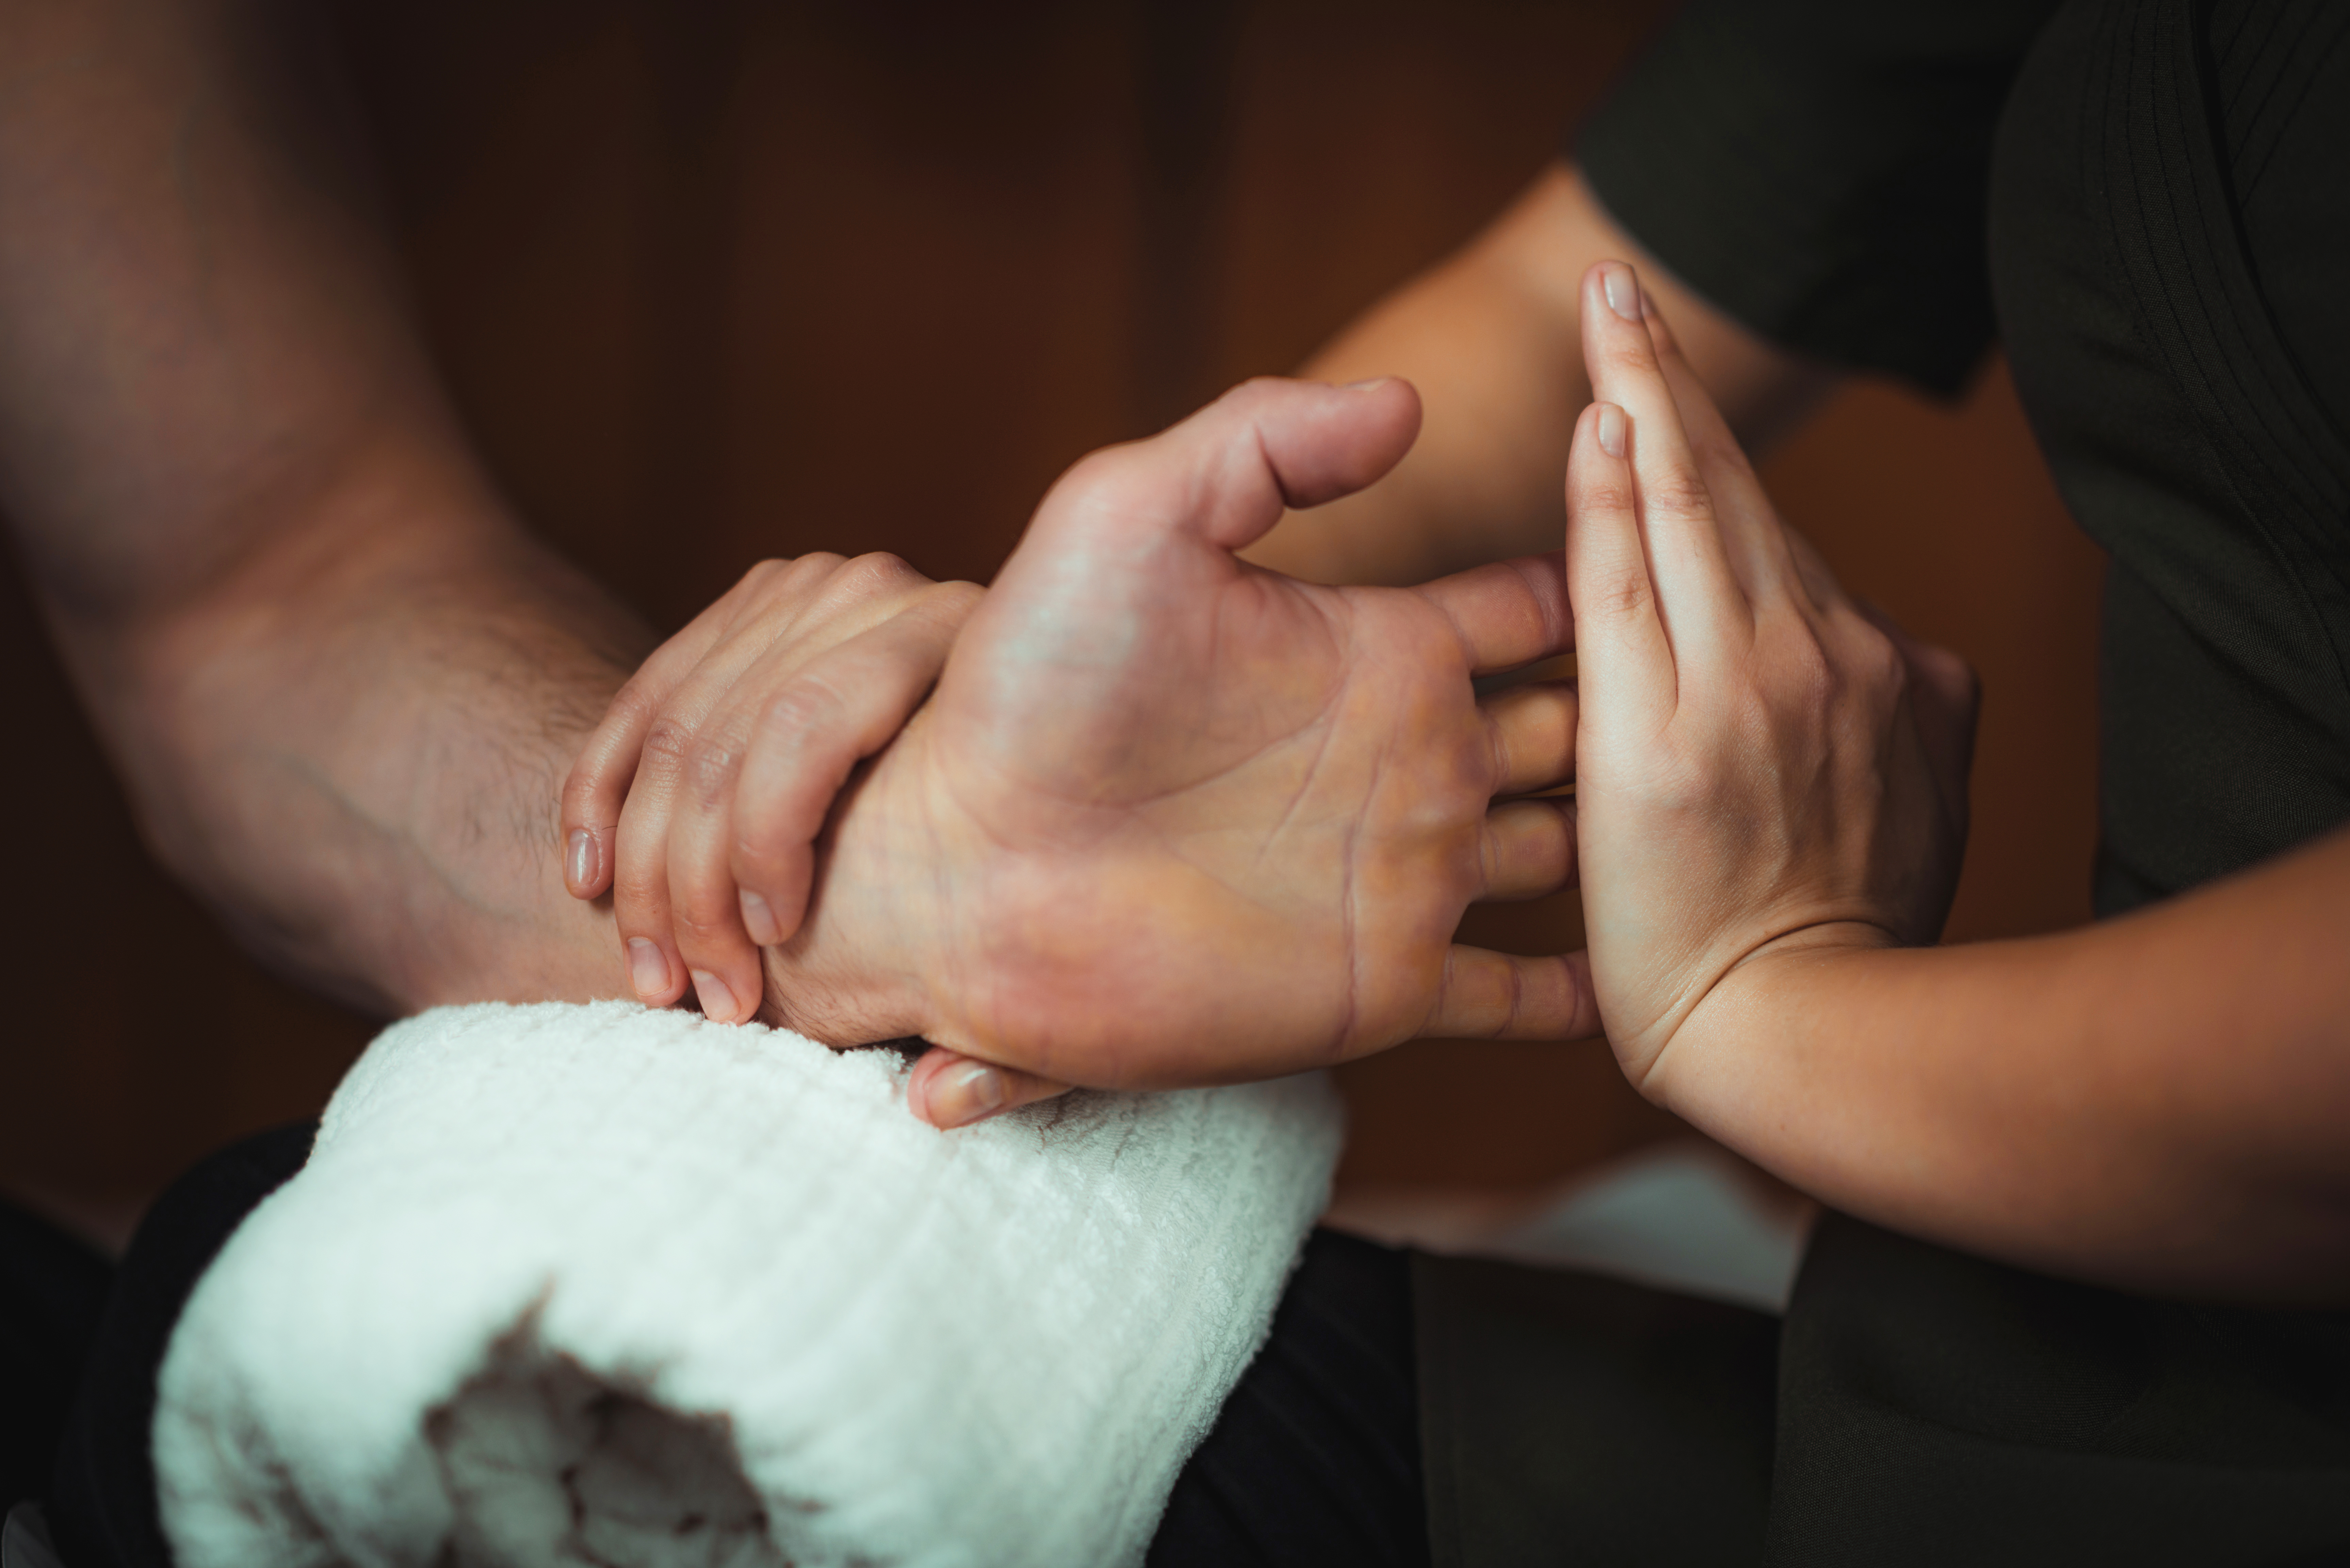 Hand Sports Massage Therapy